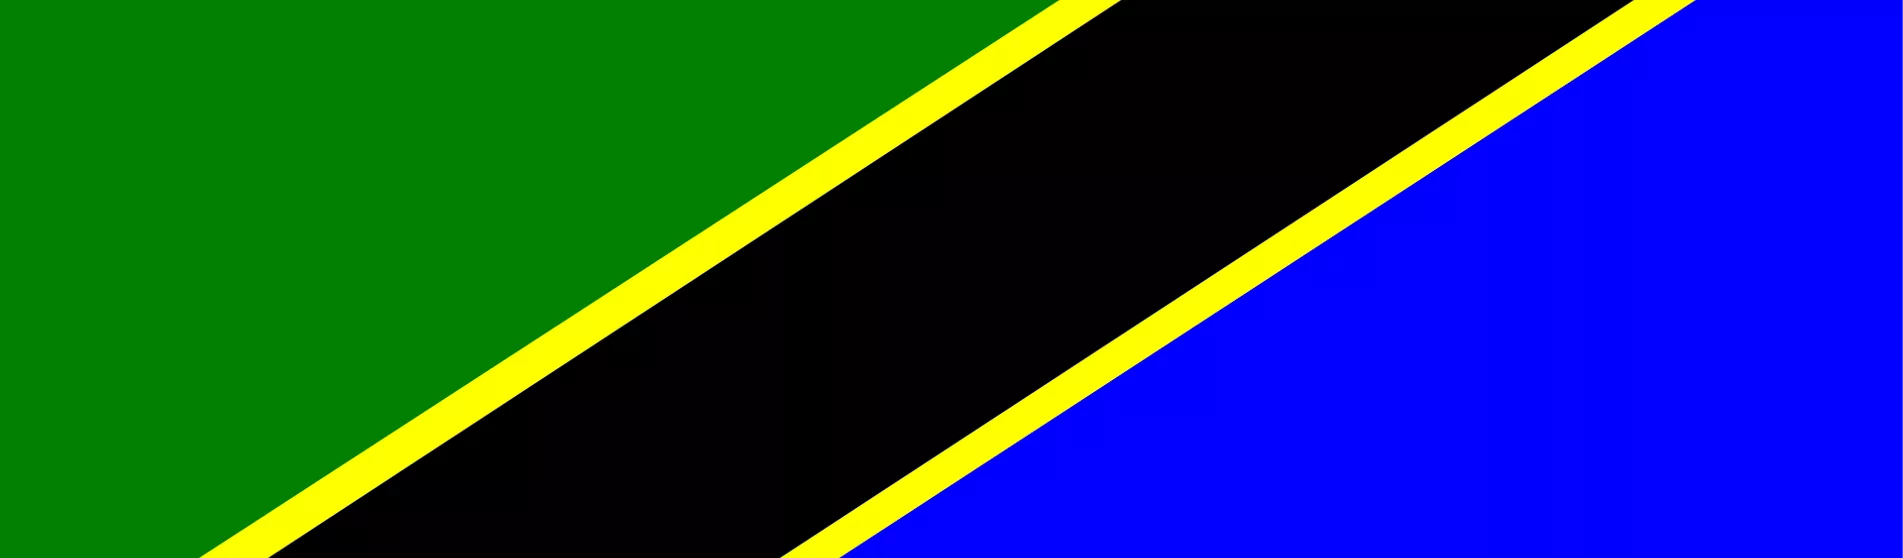 Flag of United Republic of Tanzania